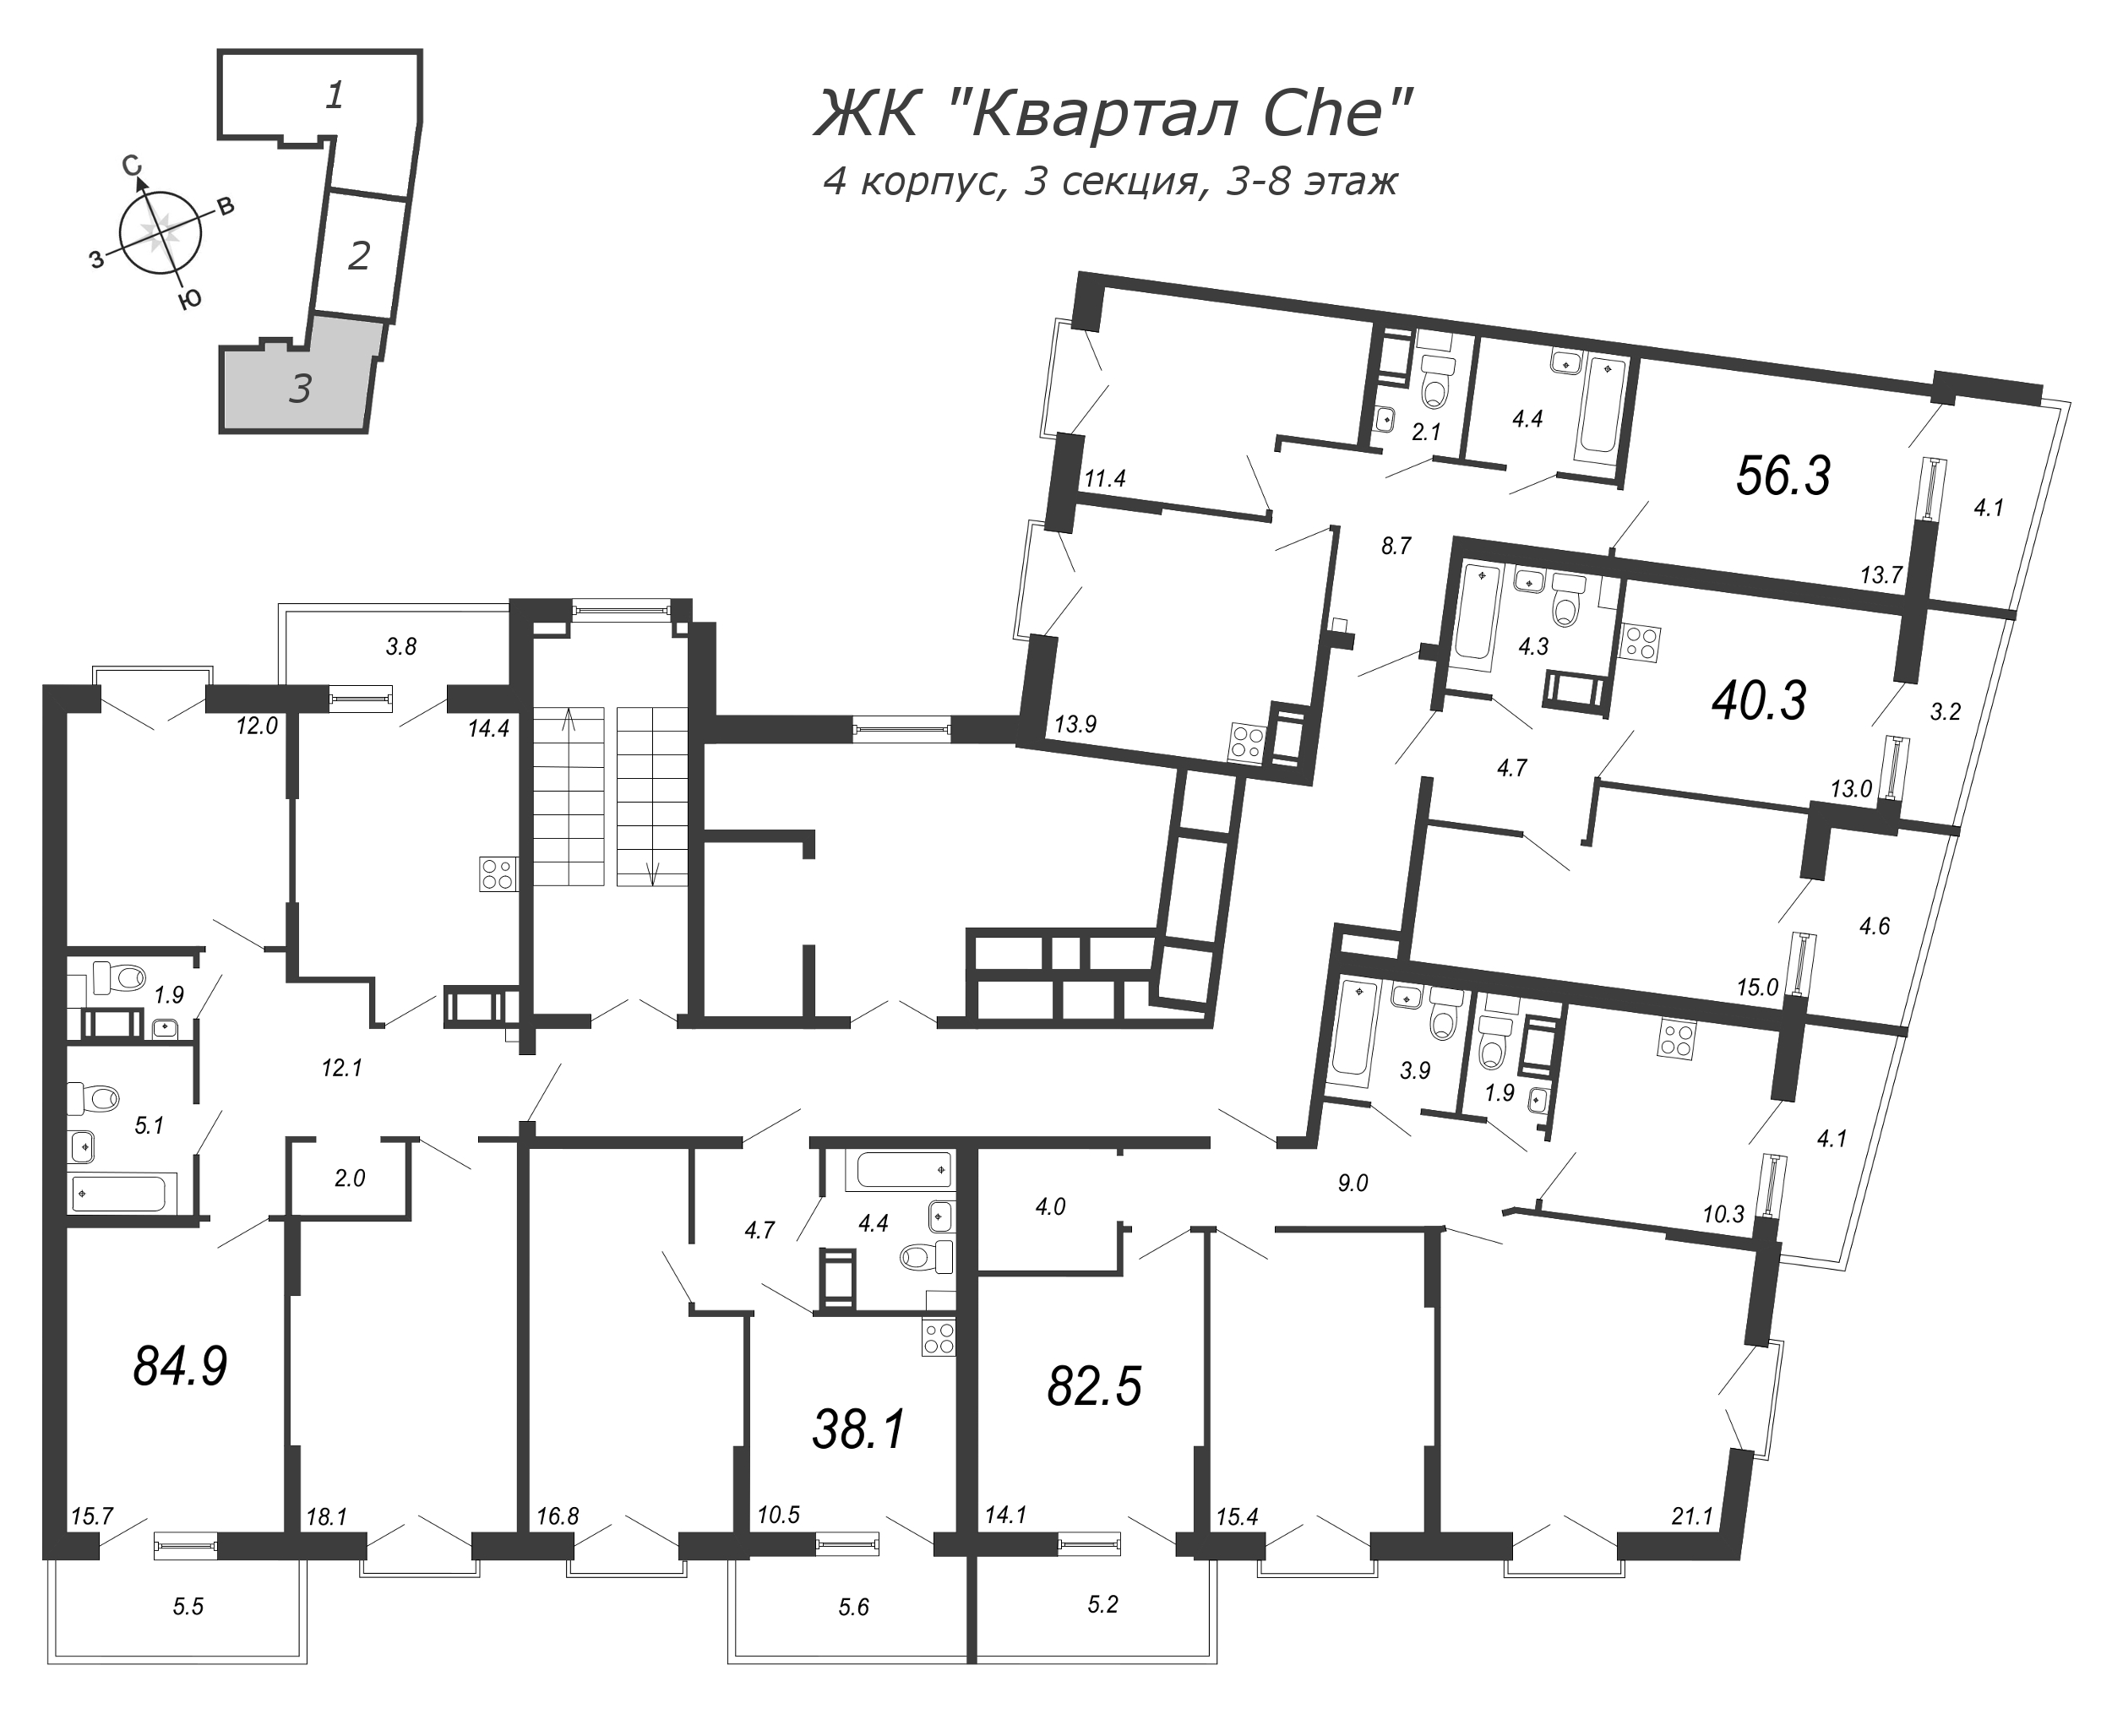 3-комнатная квартира, 83.1 м² в ЖК "Квартал Che" - планировка этажа